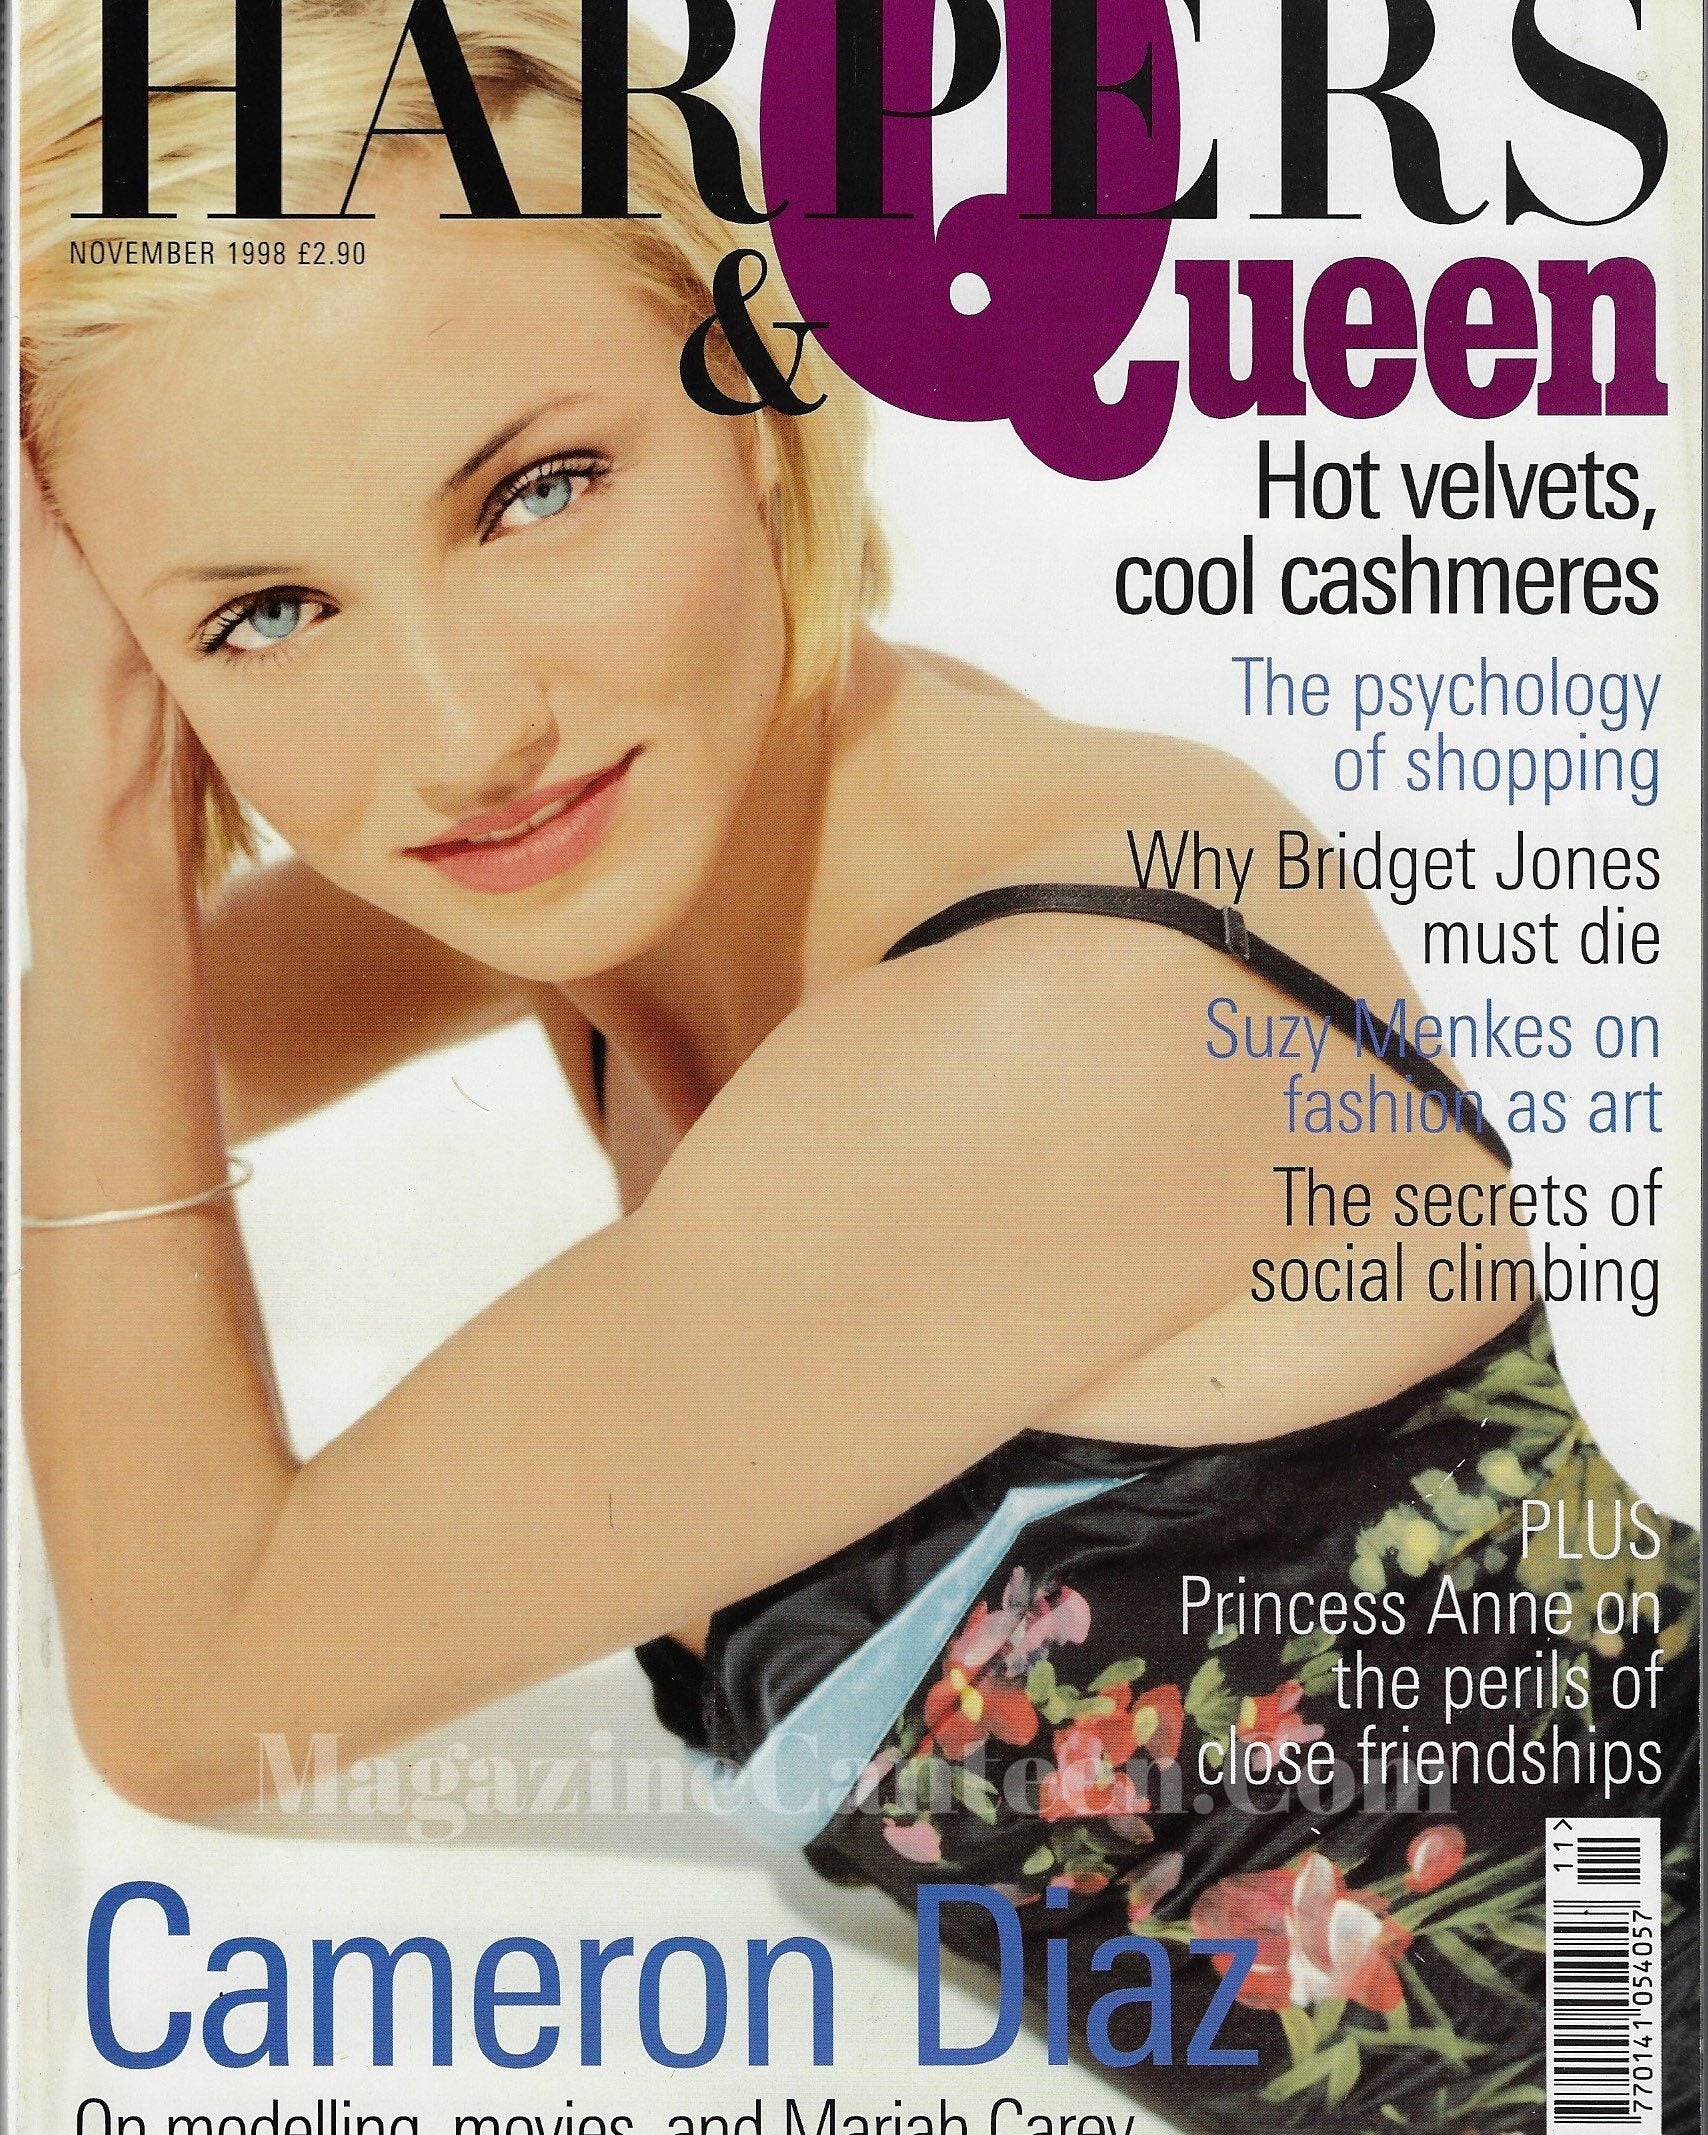 Harpers & Queen Magazine - Cameron Diaz